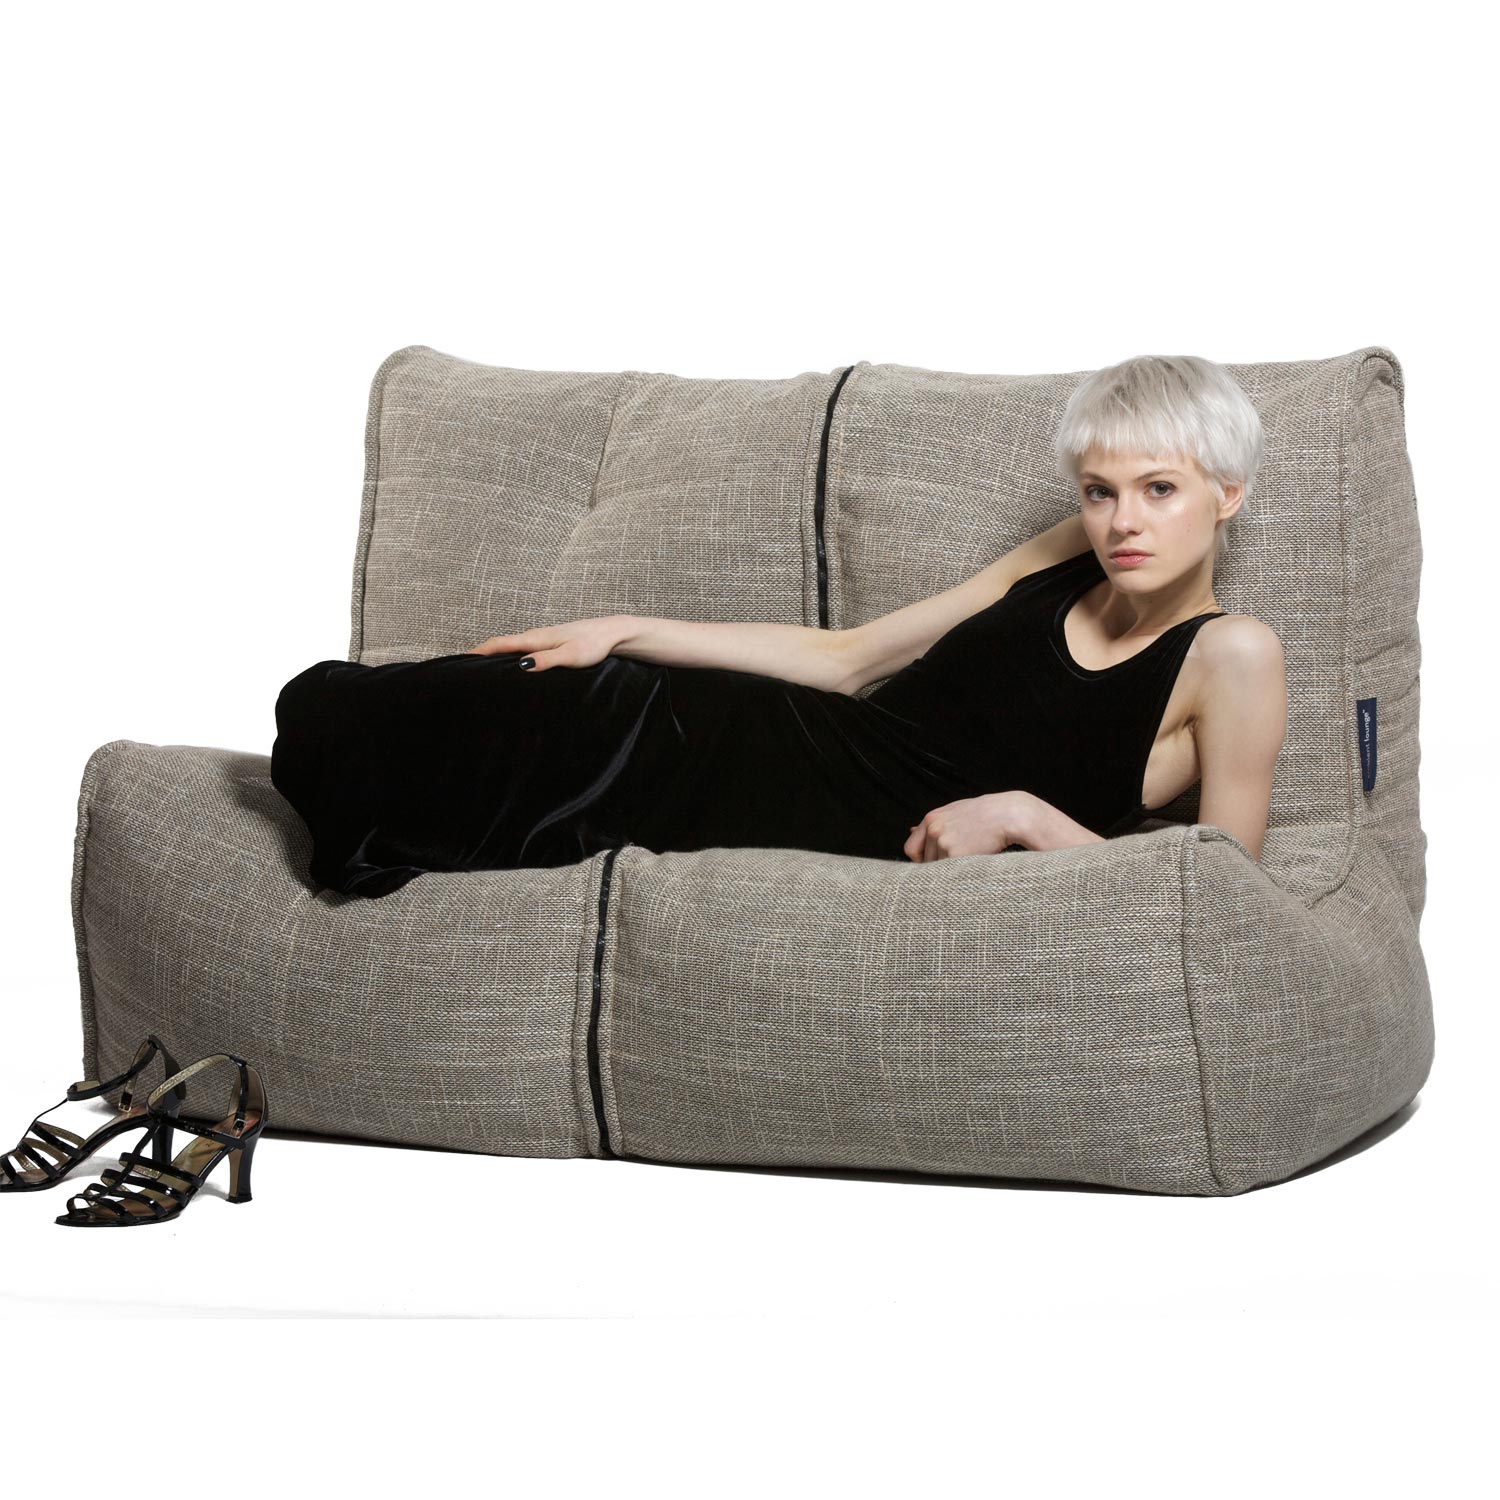 Beanbag sofa double couch eco fabric for beanbag AYOSCHG